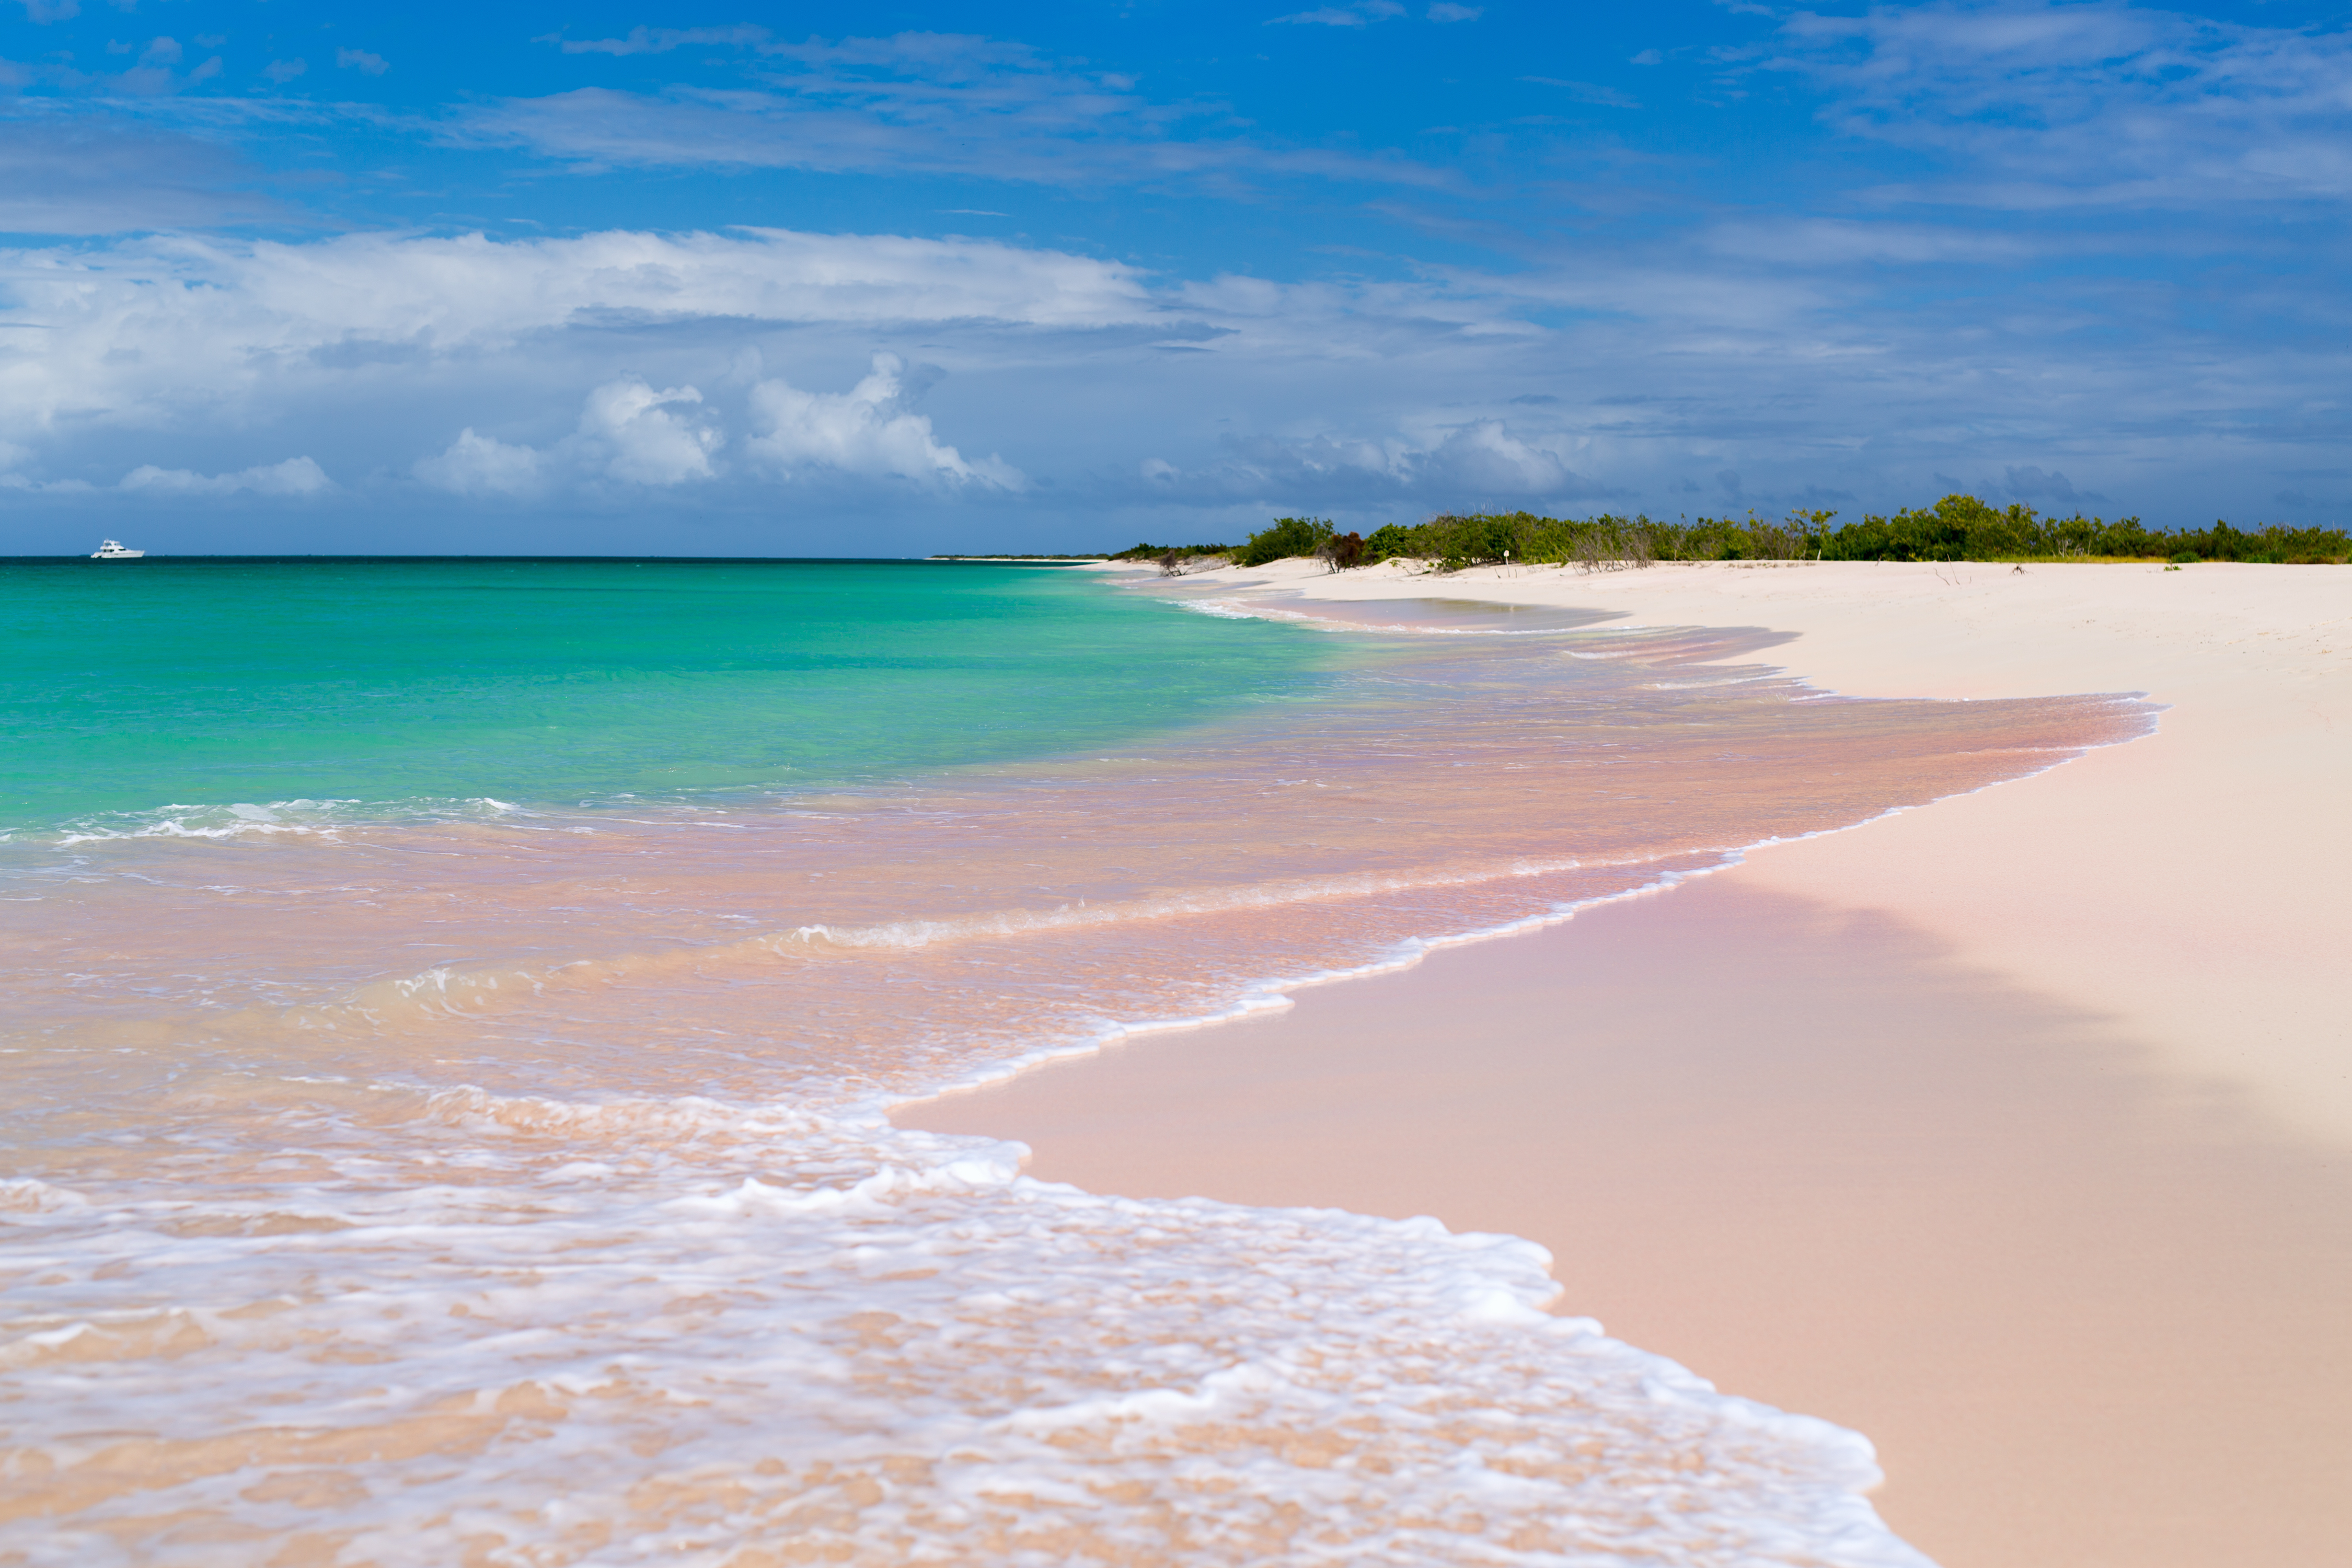 RIF Trust نشان می دهد که ساحل شن و ماسه صورتی باربودا یکی از بهترین سواحل انتیگوا و باربودا است.